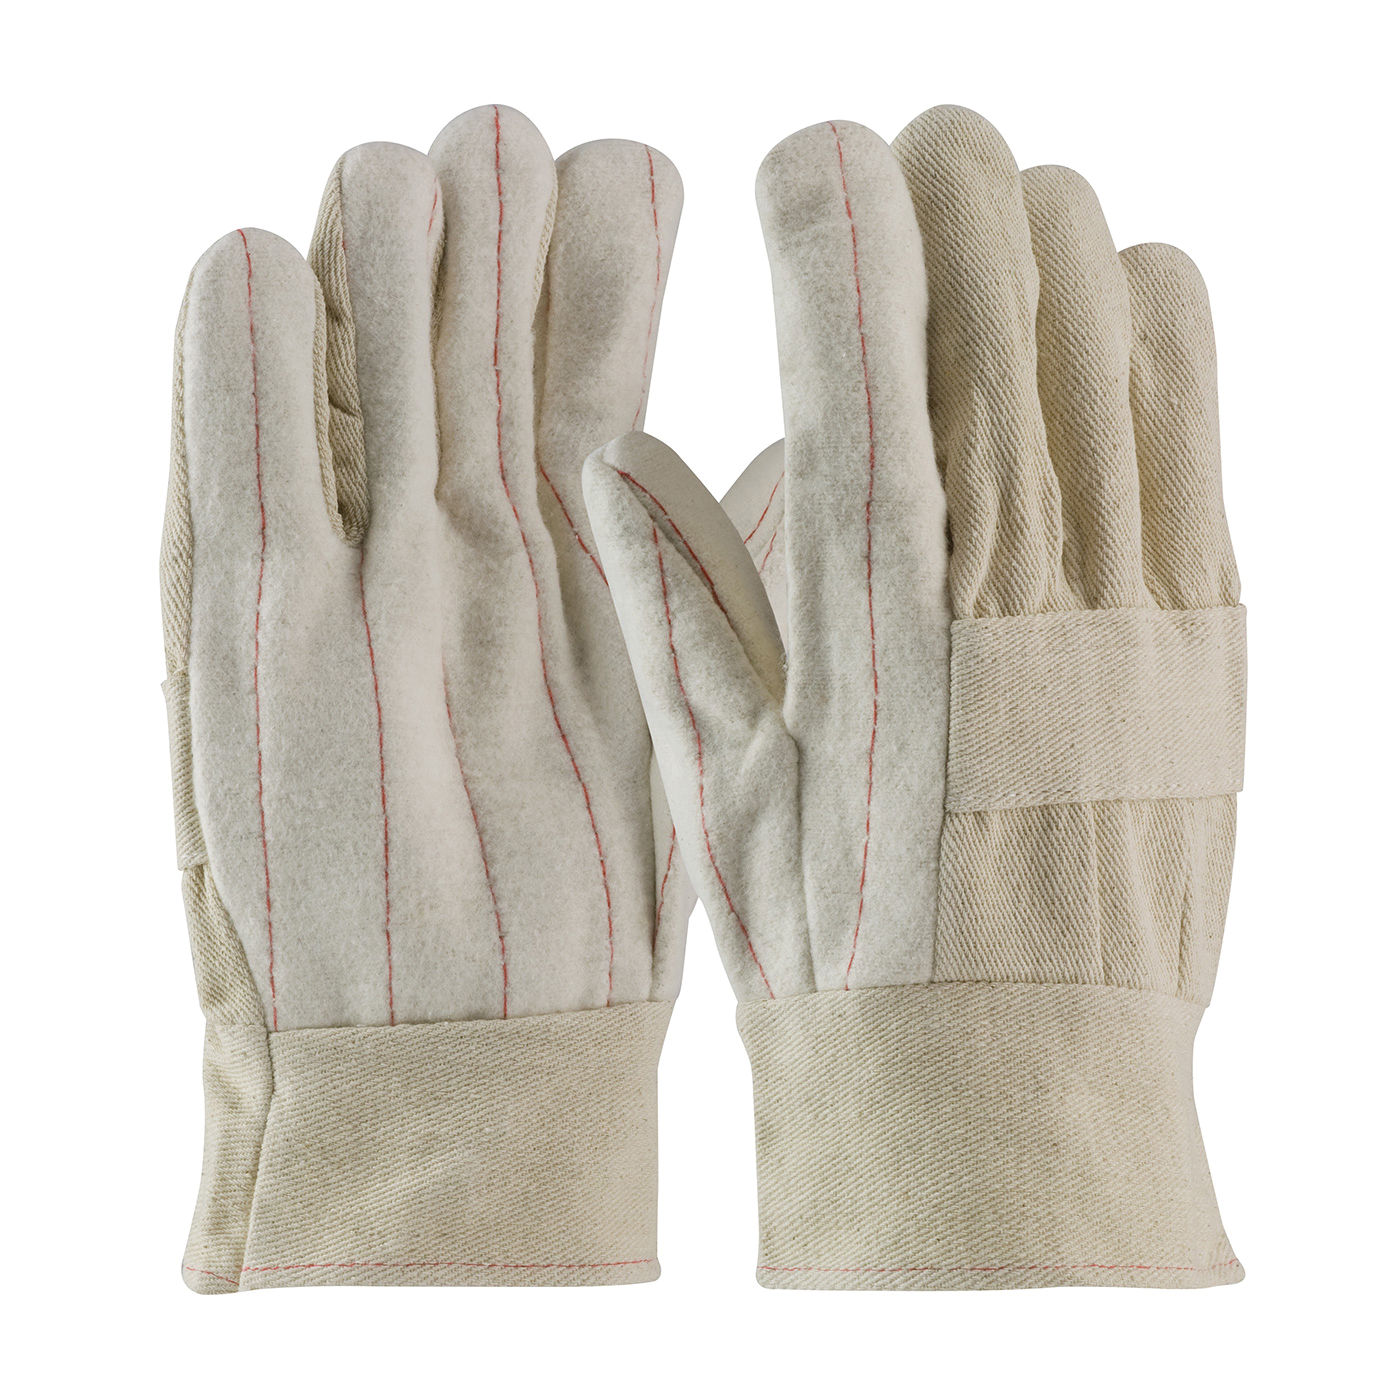 PIP® 94-924 Men's Premium Grade Hot Mill Gloves, Universal, Cotton/Canvas, Natural, Cotton, Open Band Top Cuff, 10.6 in L